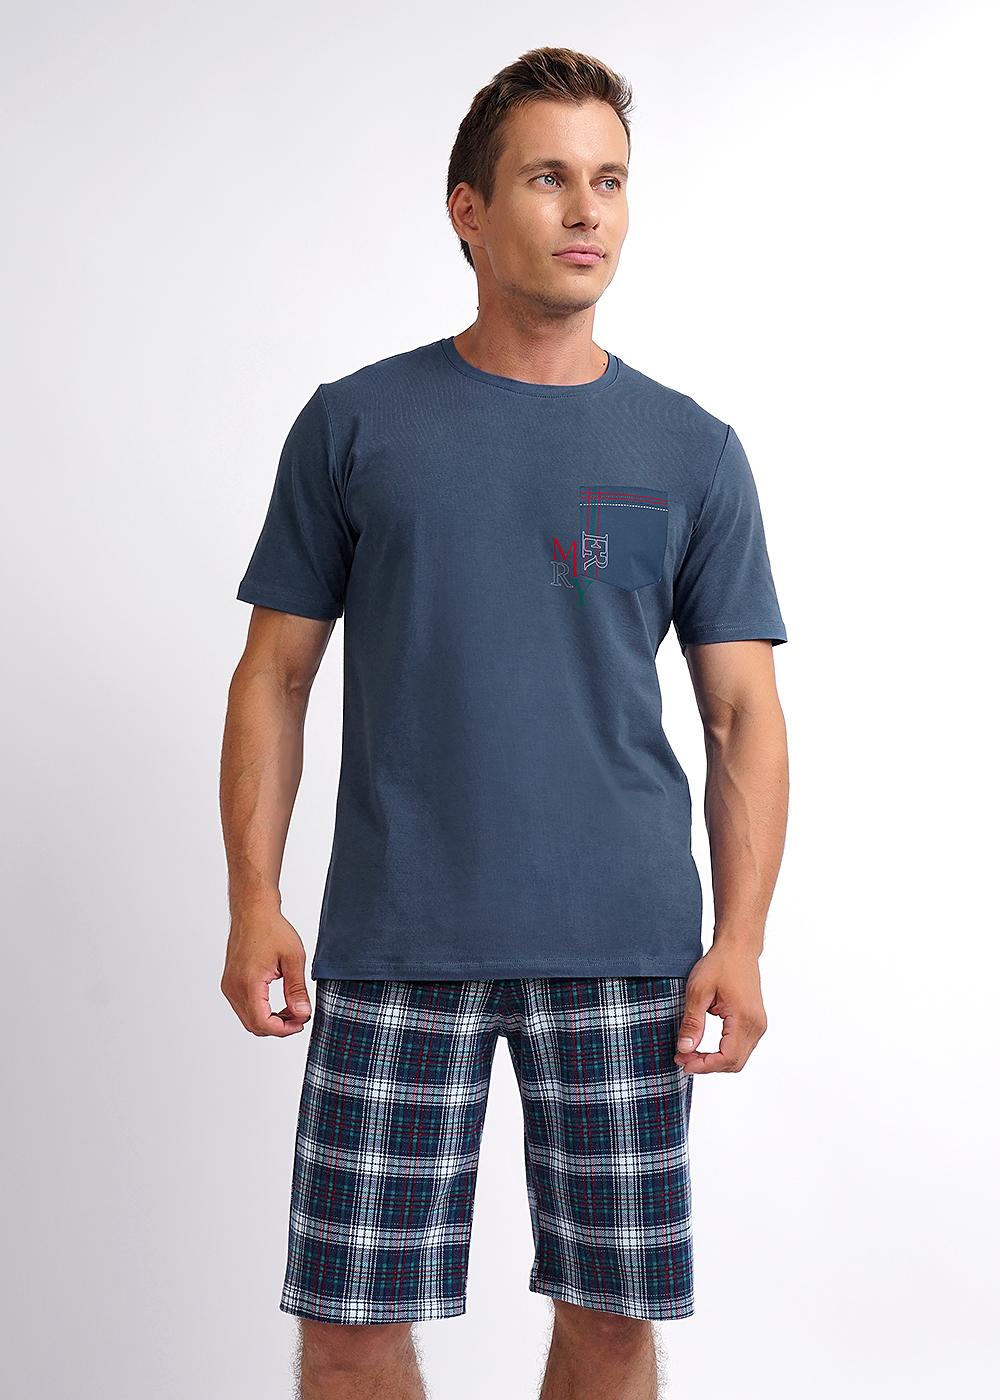 Комплект футболка + шорты для мужчин Clever 172881